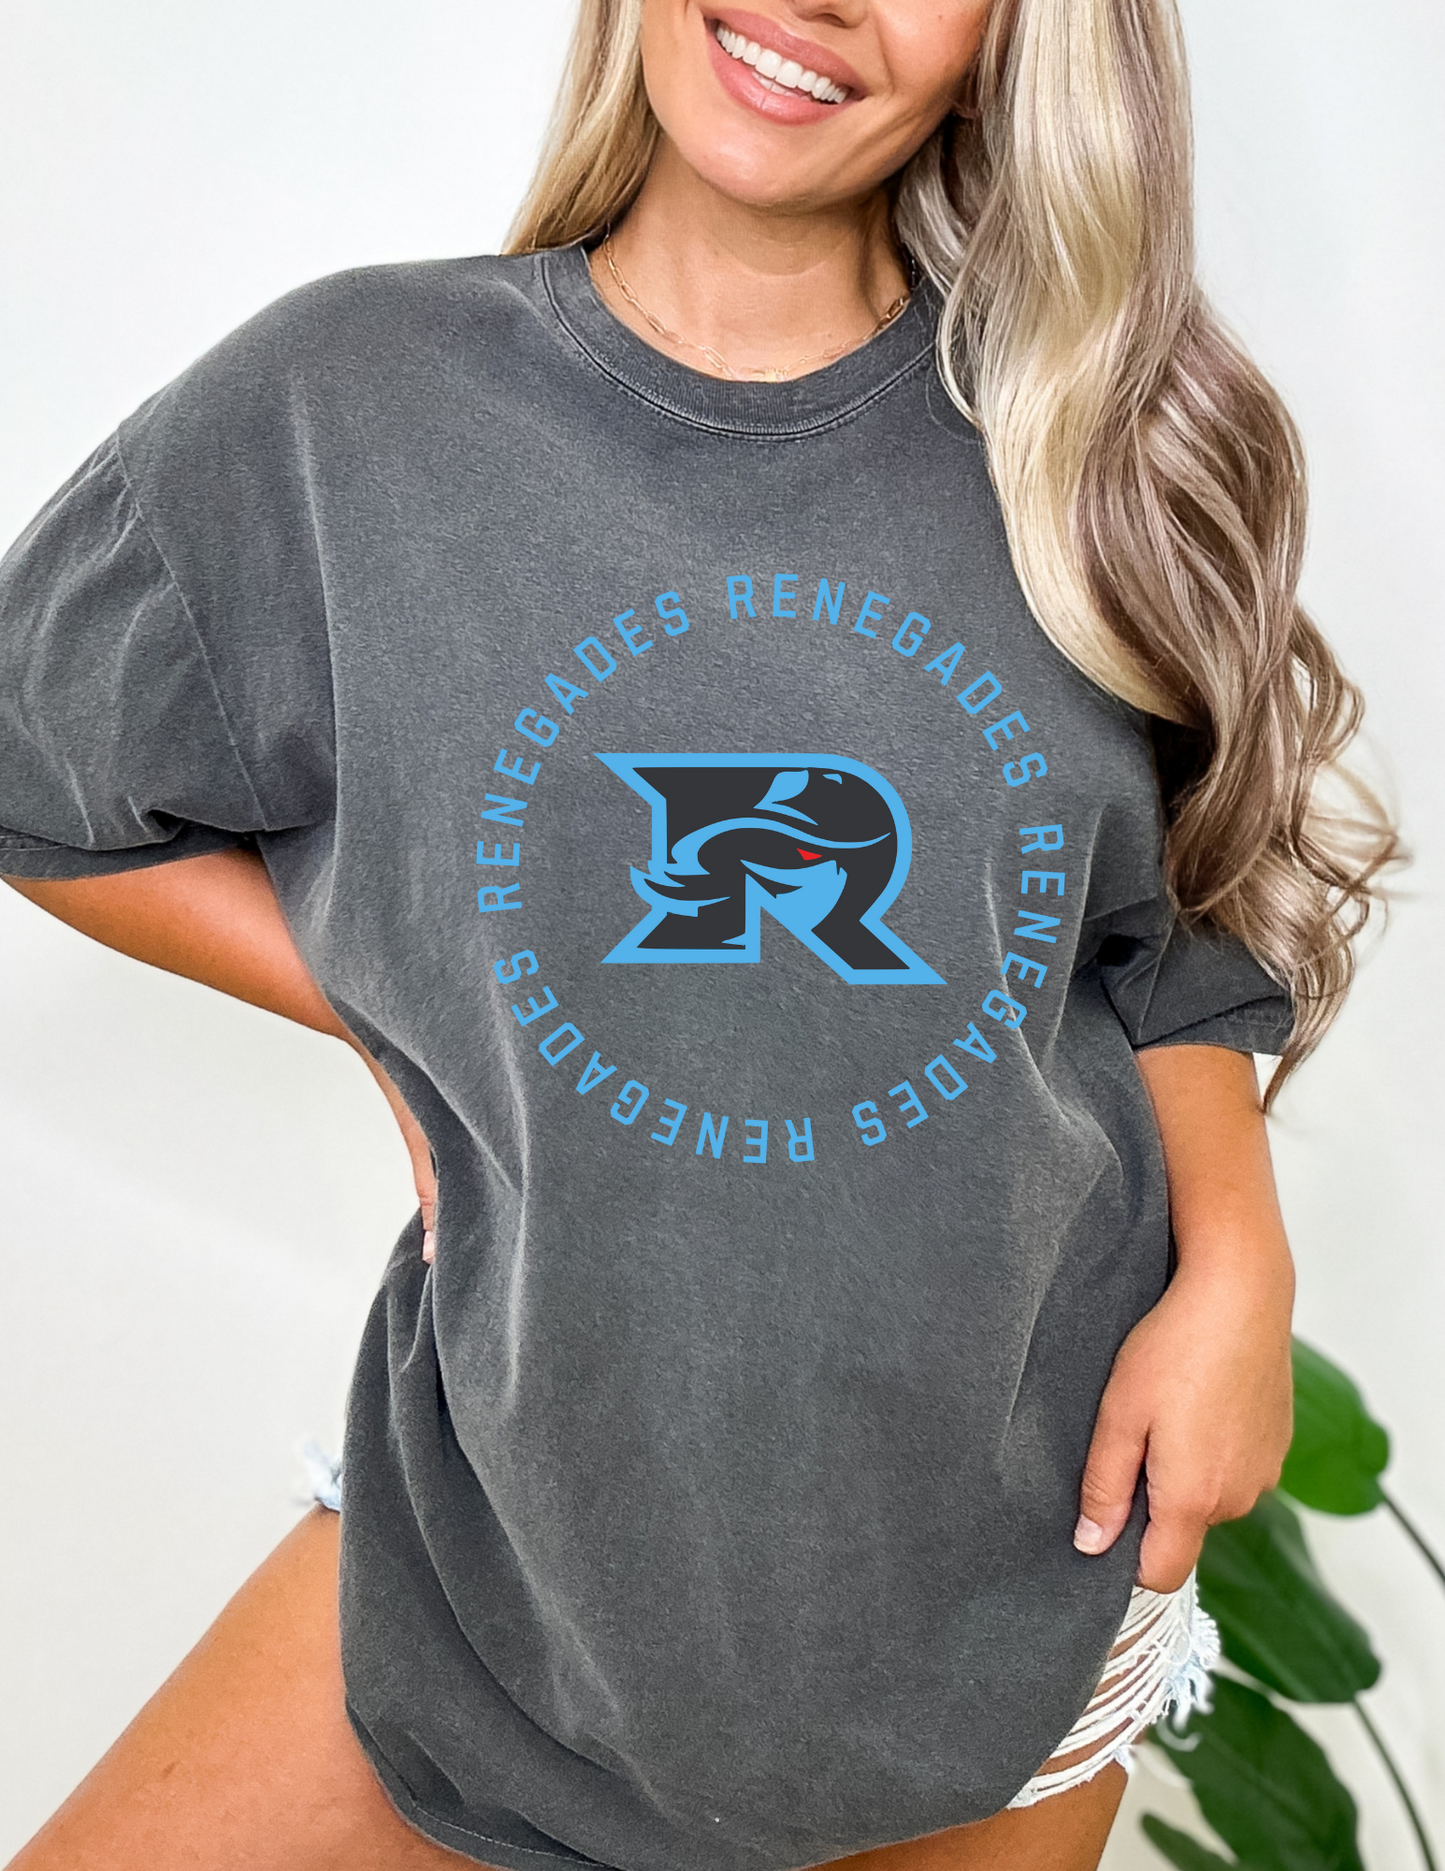 Renegades Logo BLUE (Comfort Colors)